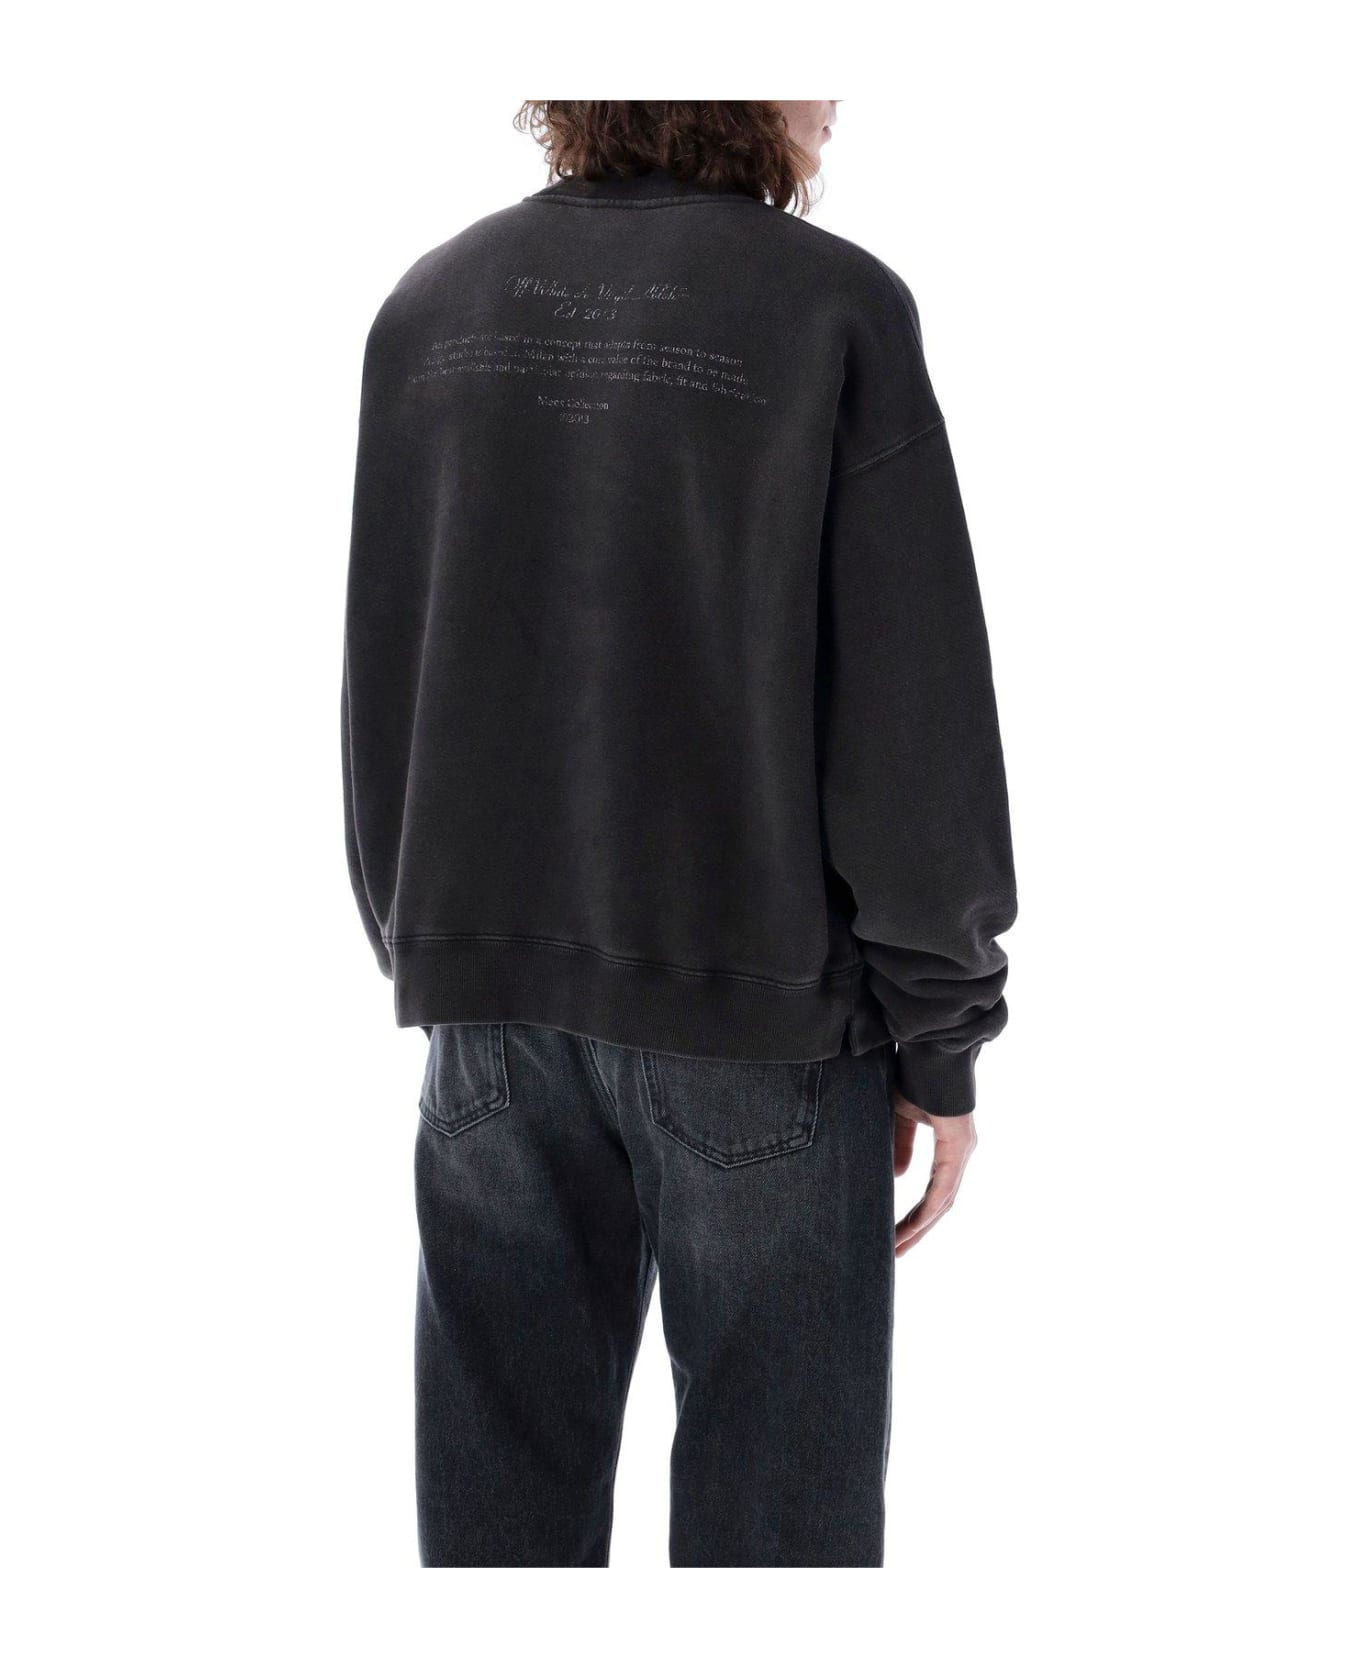 Off-White Mary Skate Crewneck Long-sleeved Sweatshirt - BLACK GREY